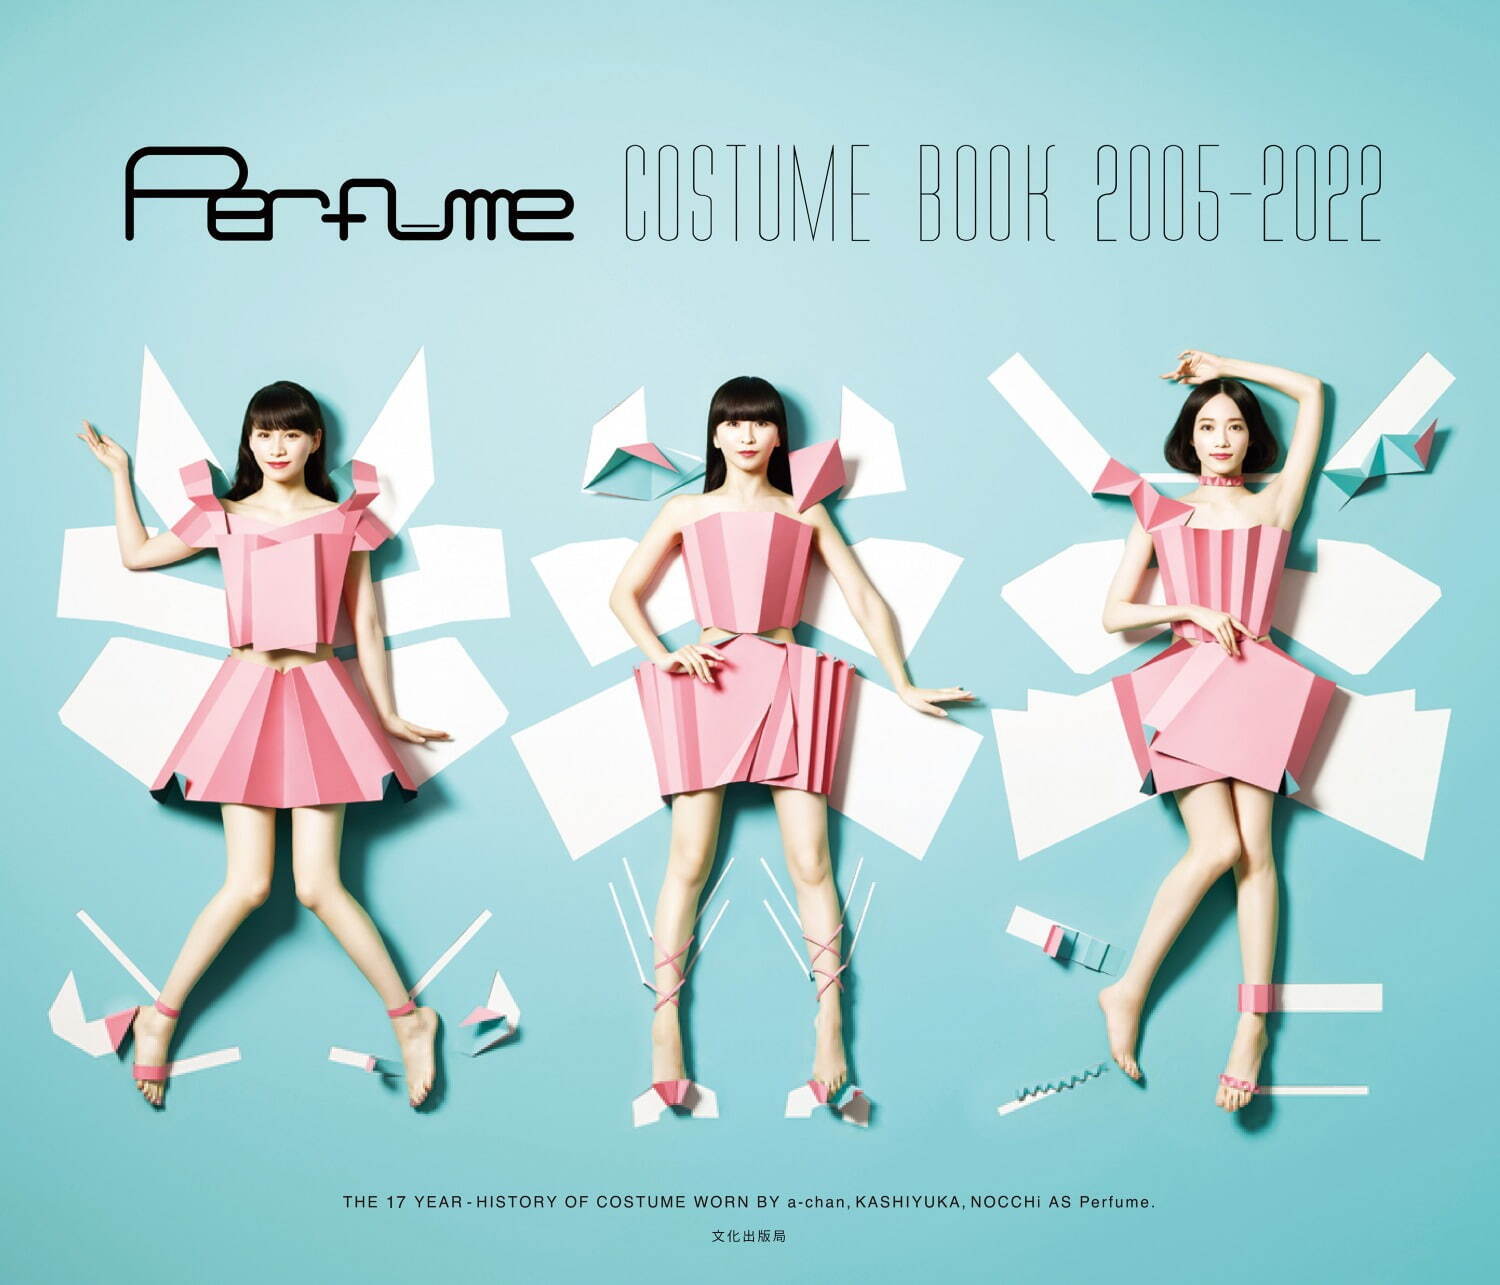 『Perfume COSTUME BOOK 2005-2022 e-book edition』 (9月1日リリース)